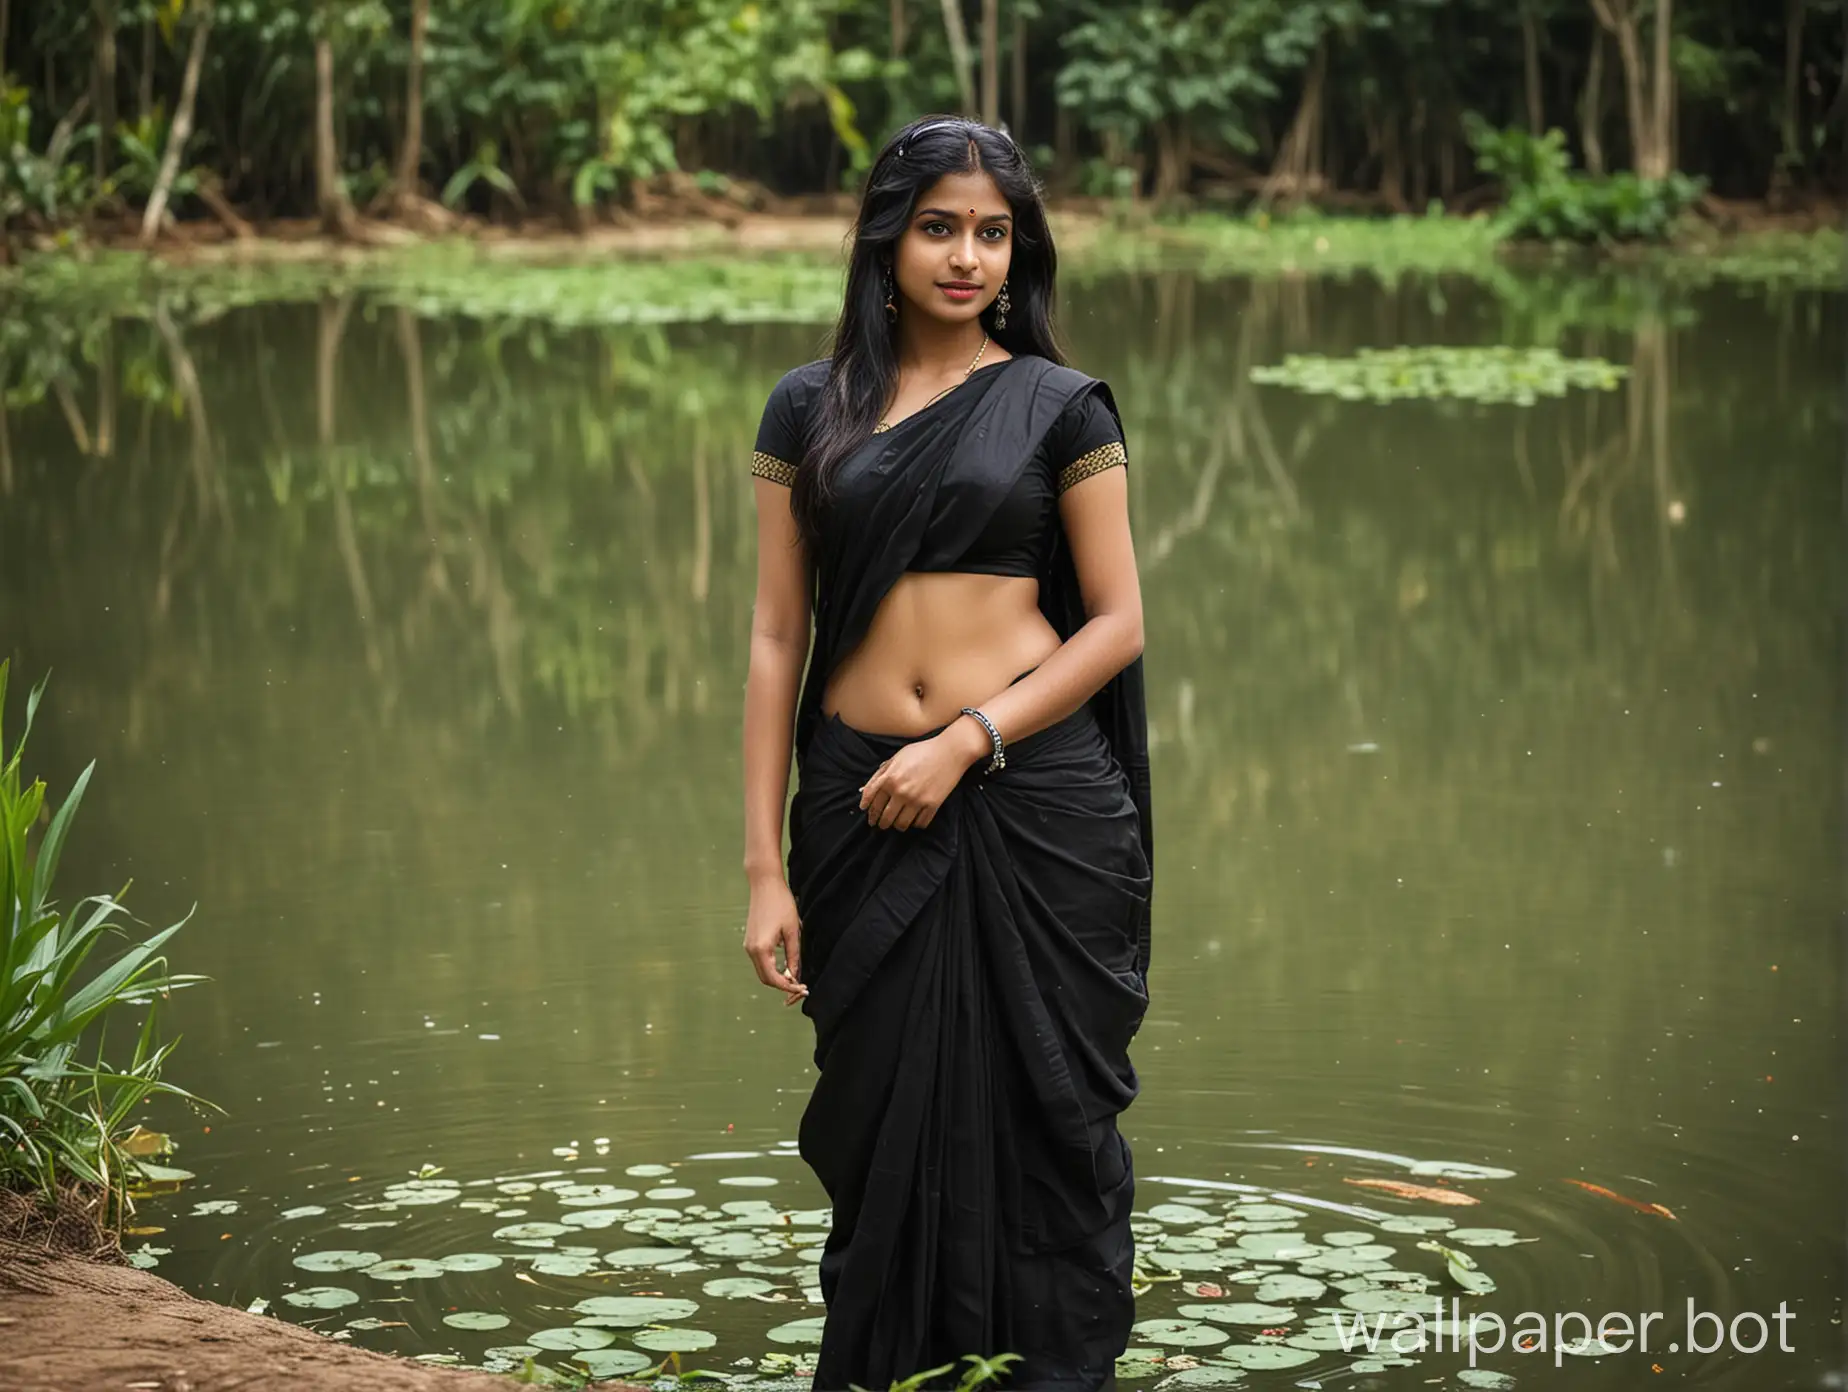 Kerala-Girl-in-Elegant-Black-Sari-with-Blurred-Pond-Background